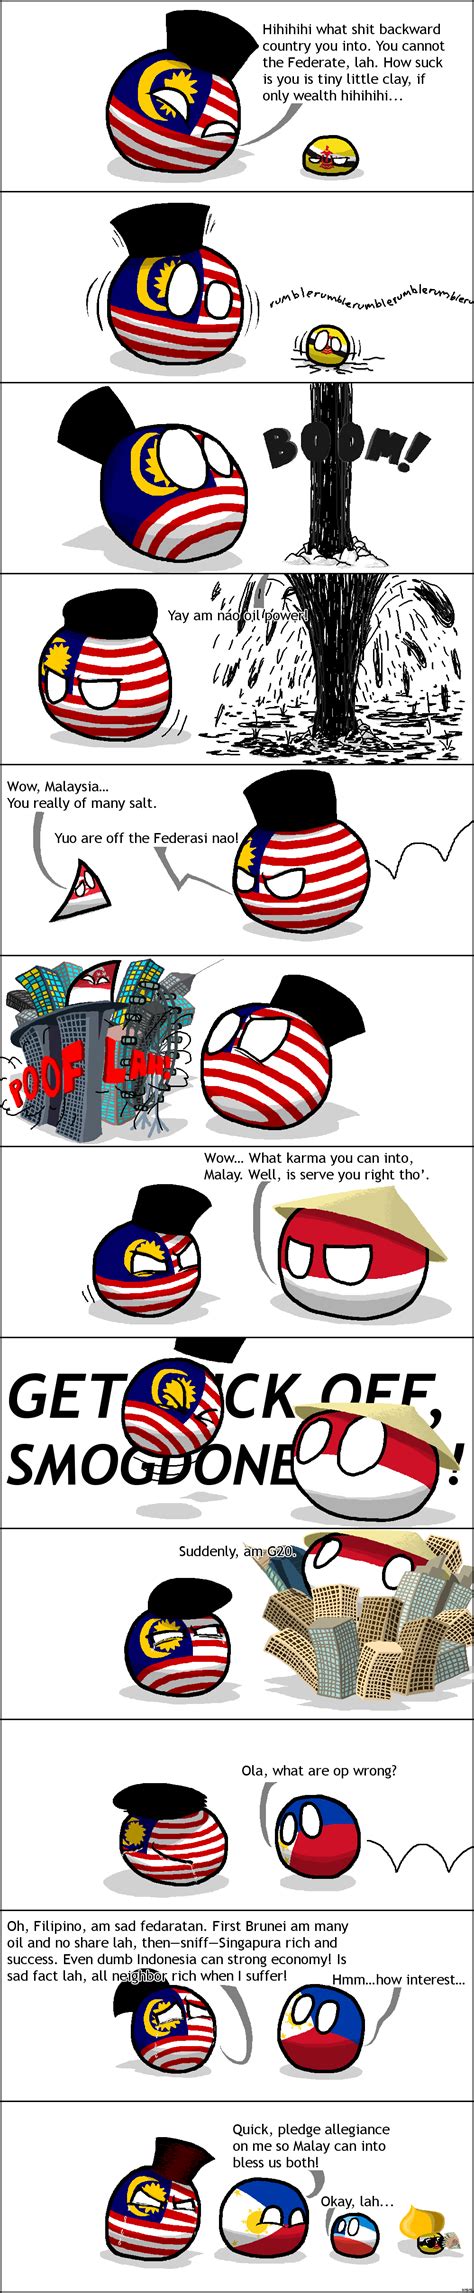 malaysia s lament polandball